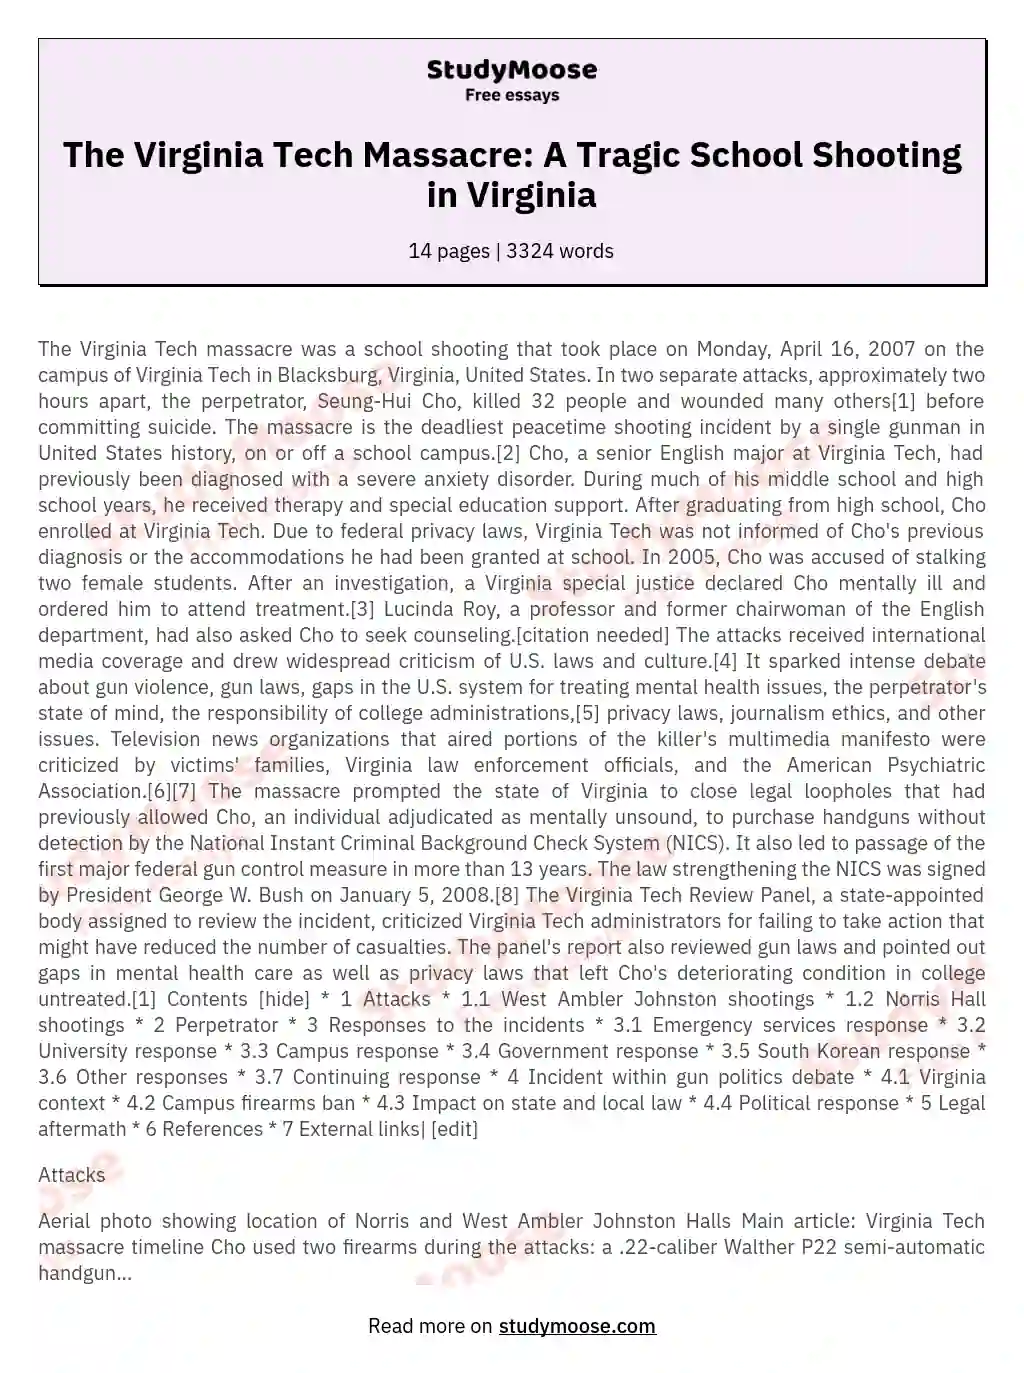 The Virginia Tech Massacre: Impact and Responses essay